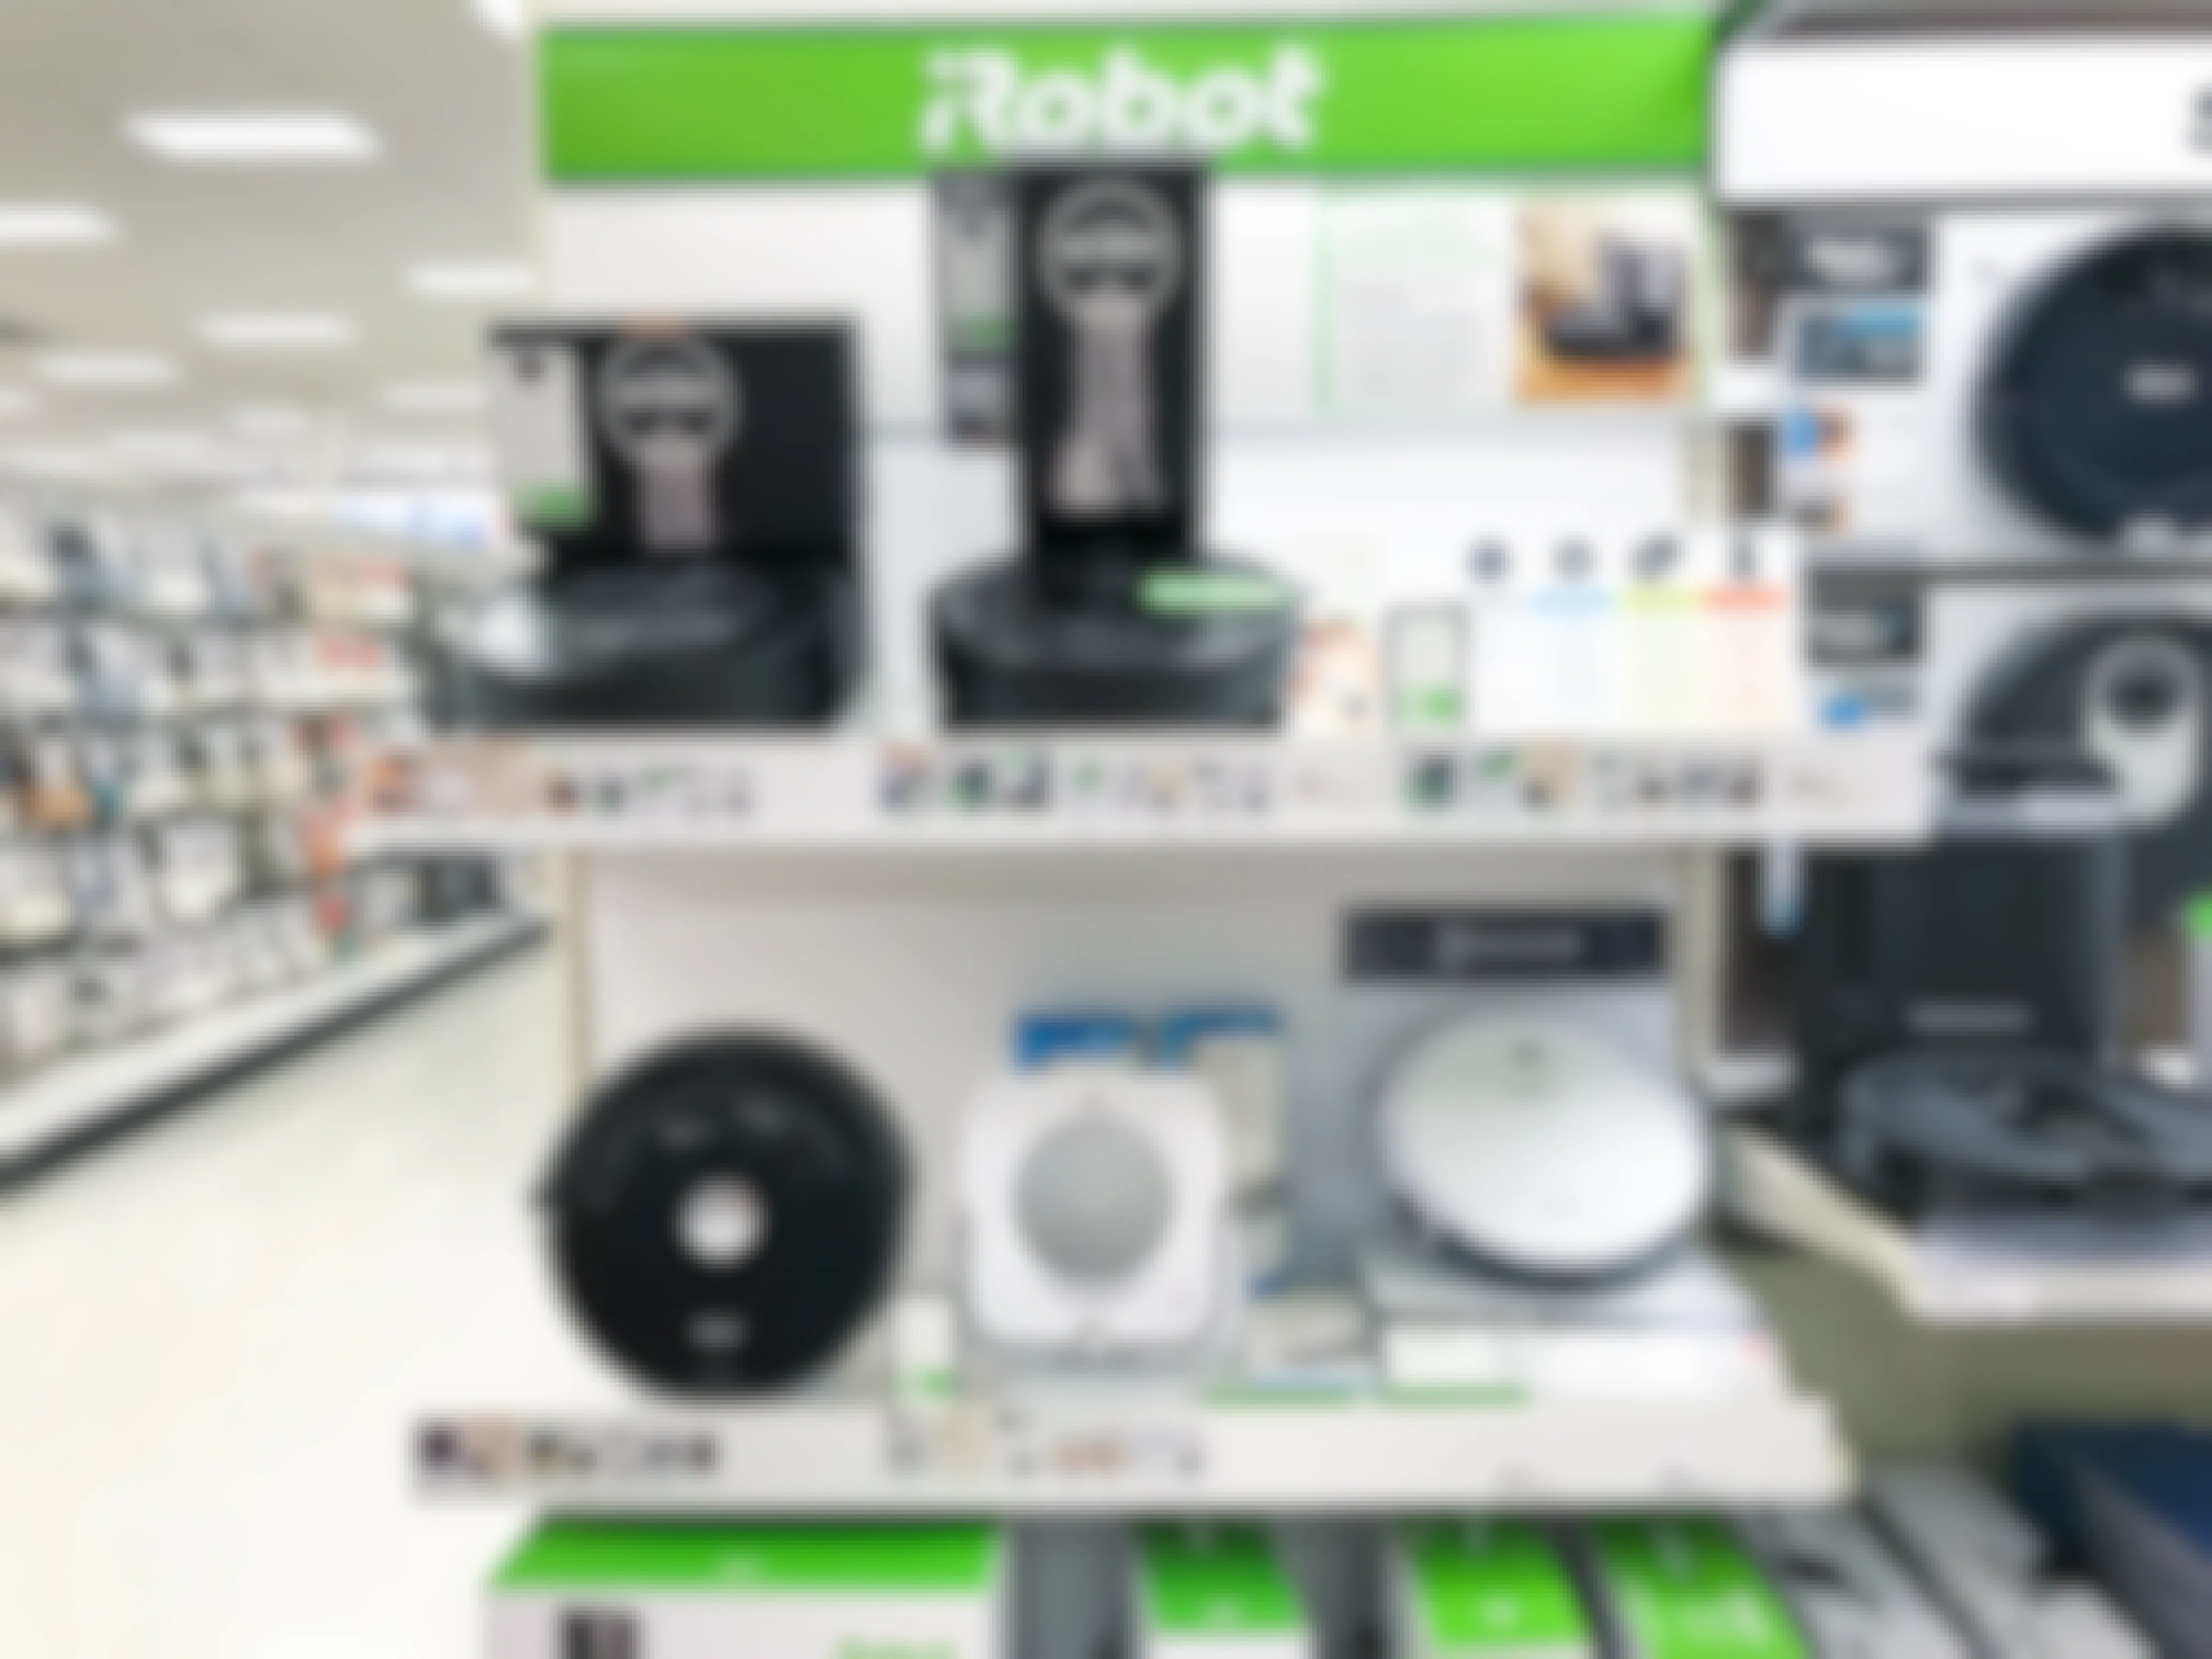 Amazon iRobot Roomba models on display at Target